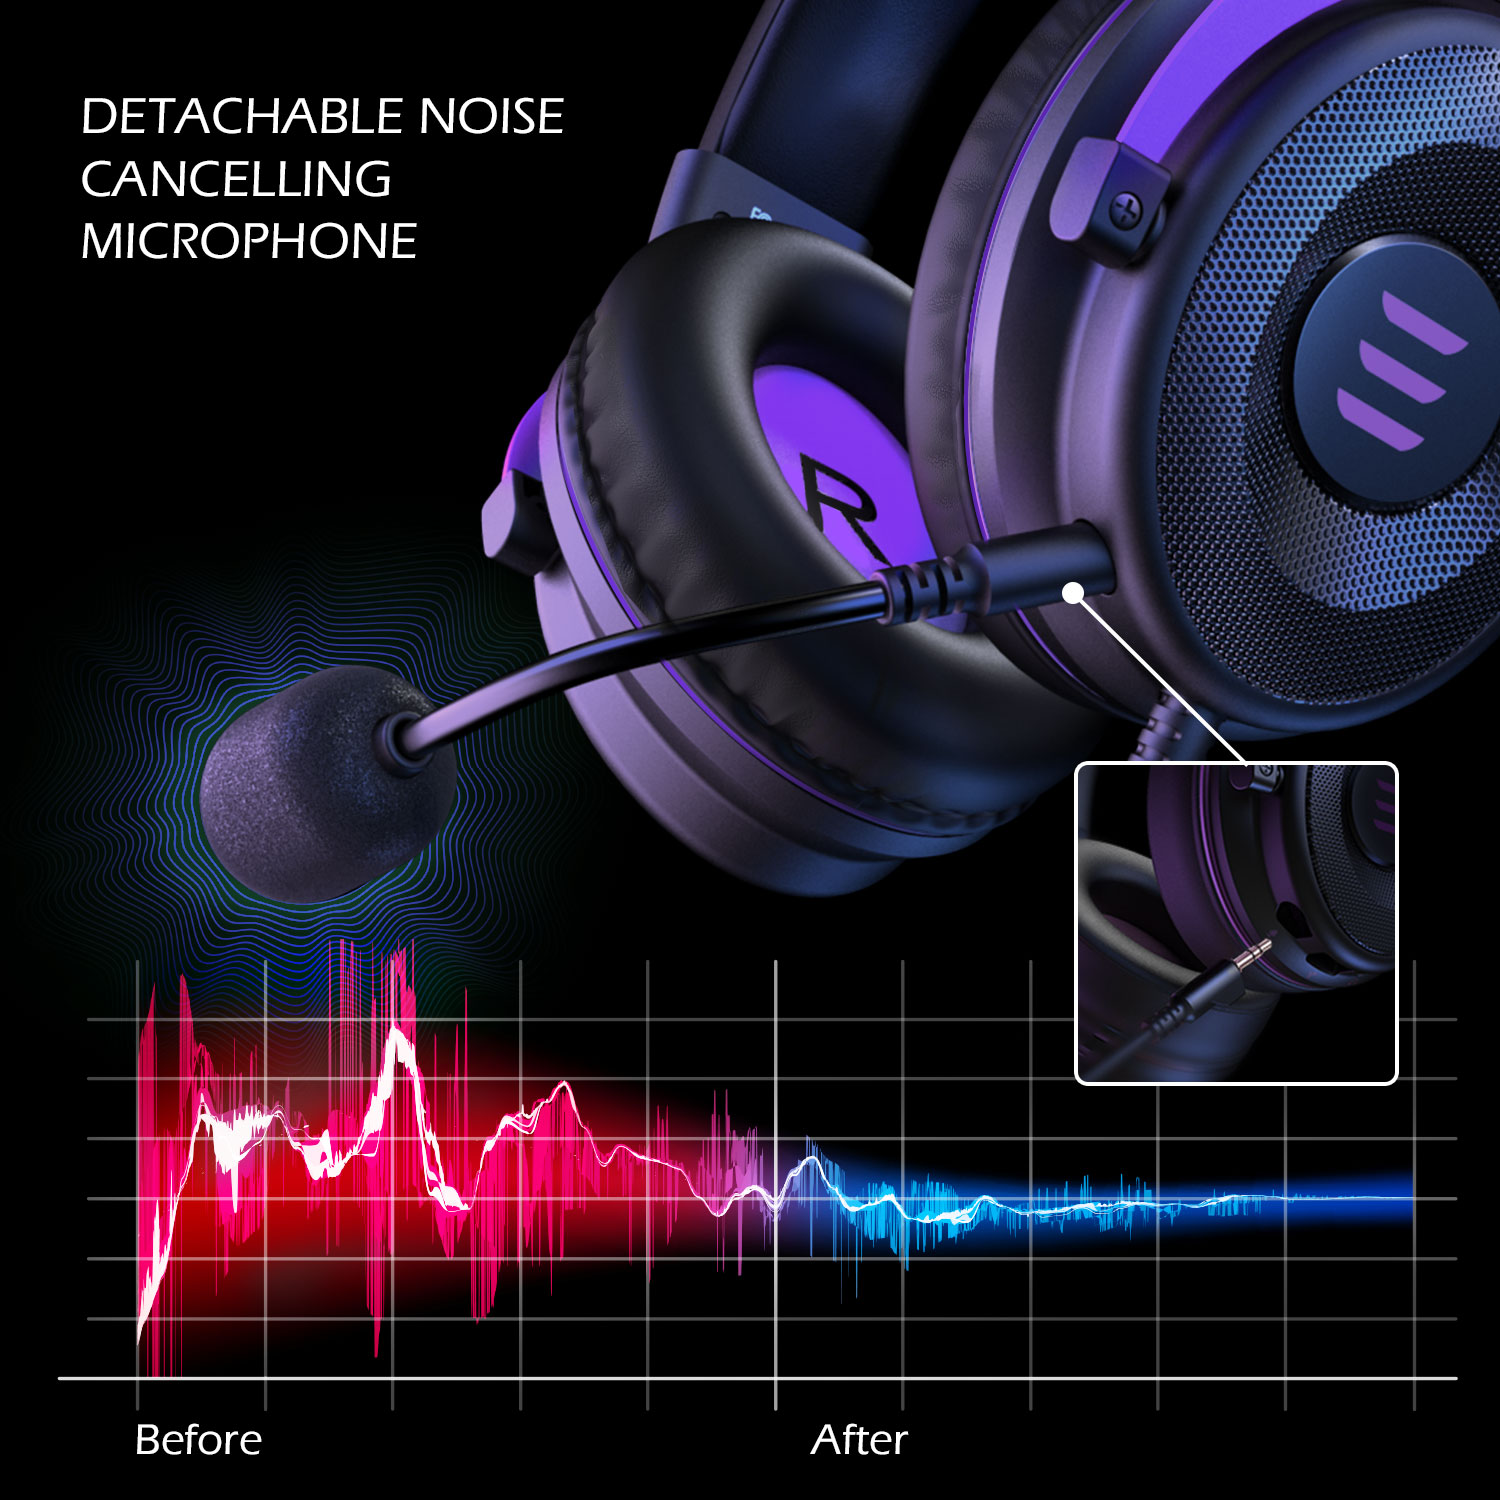 Headset Gaming EKSA-TRADE Mikrofon Purple mit Over-ear E900,